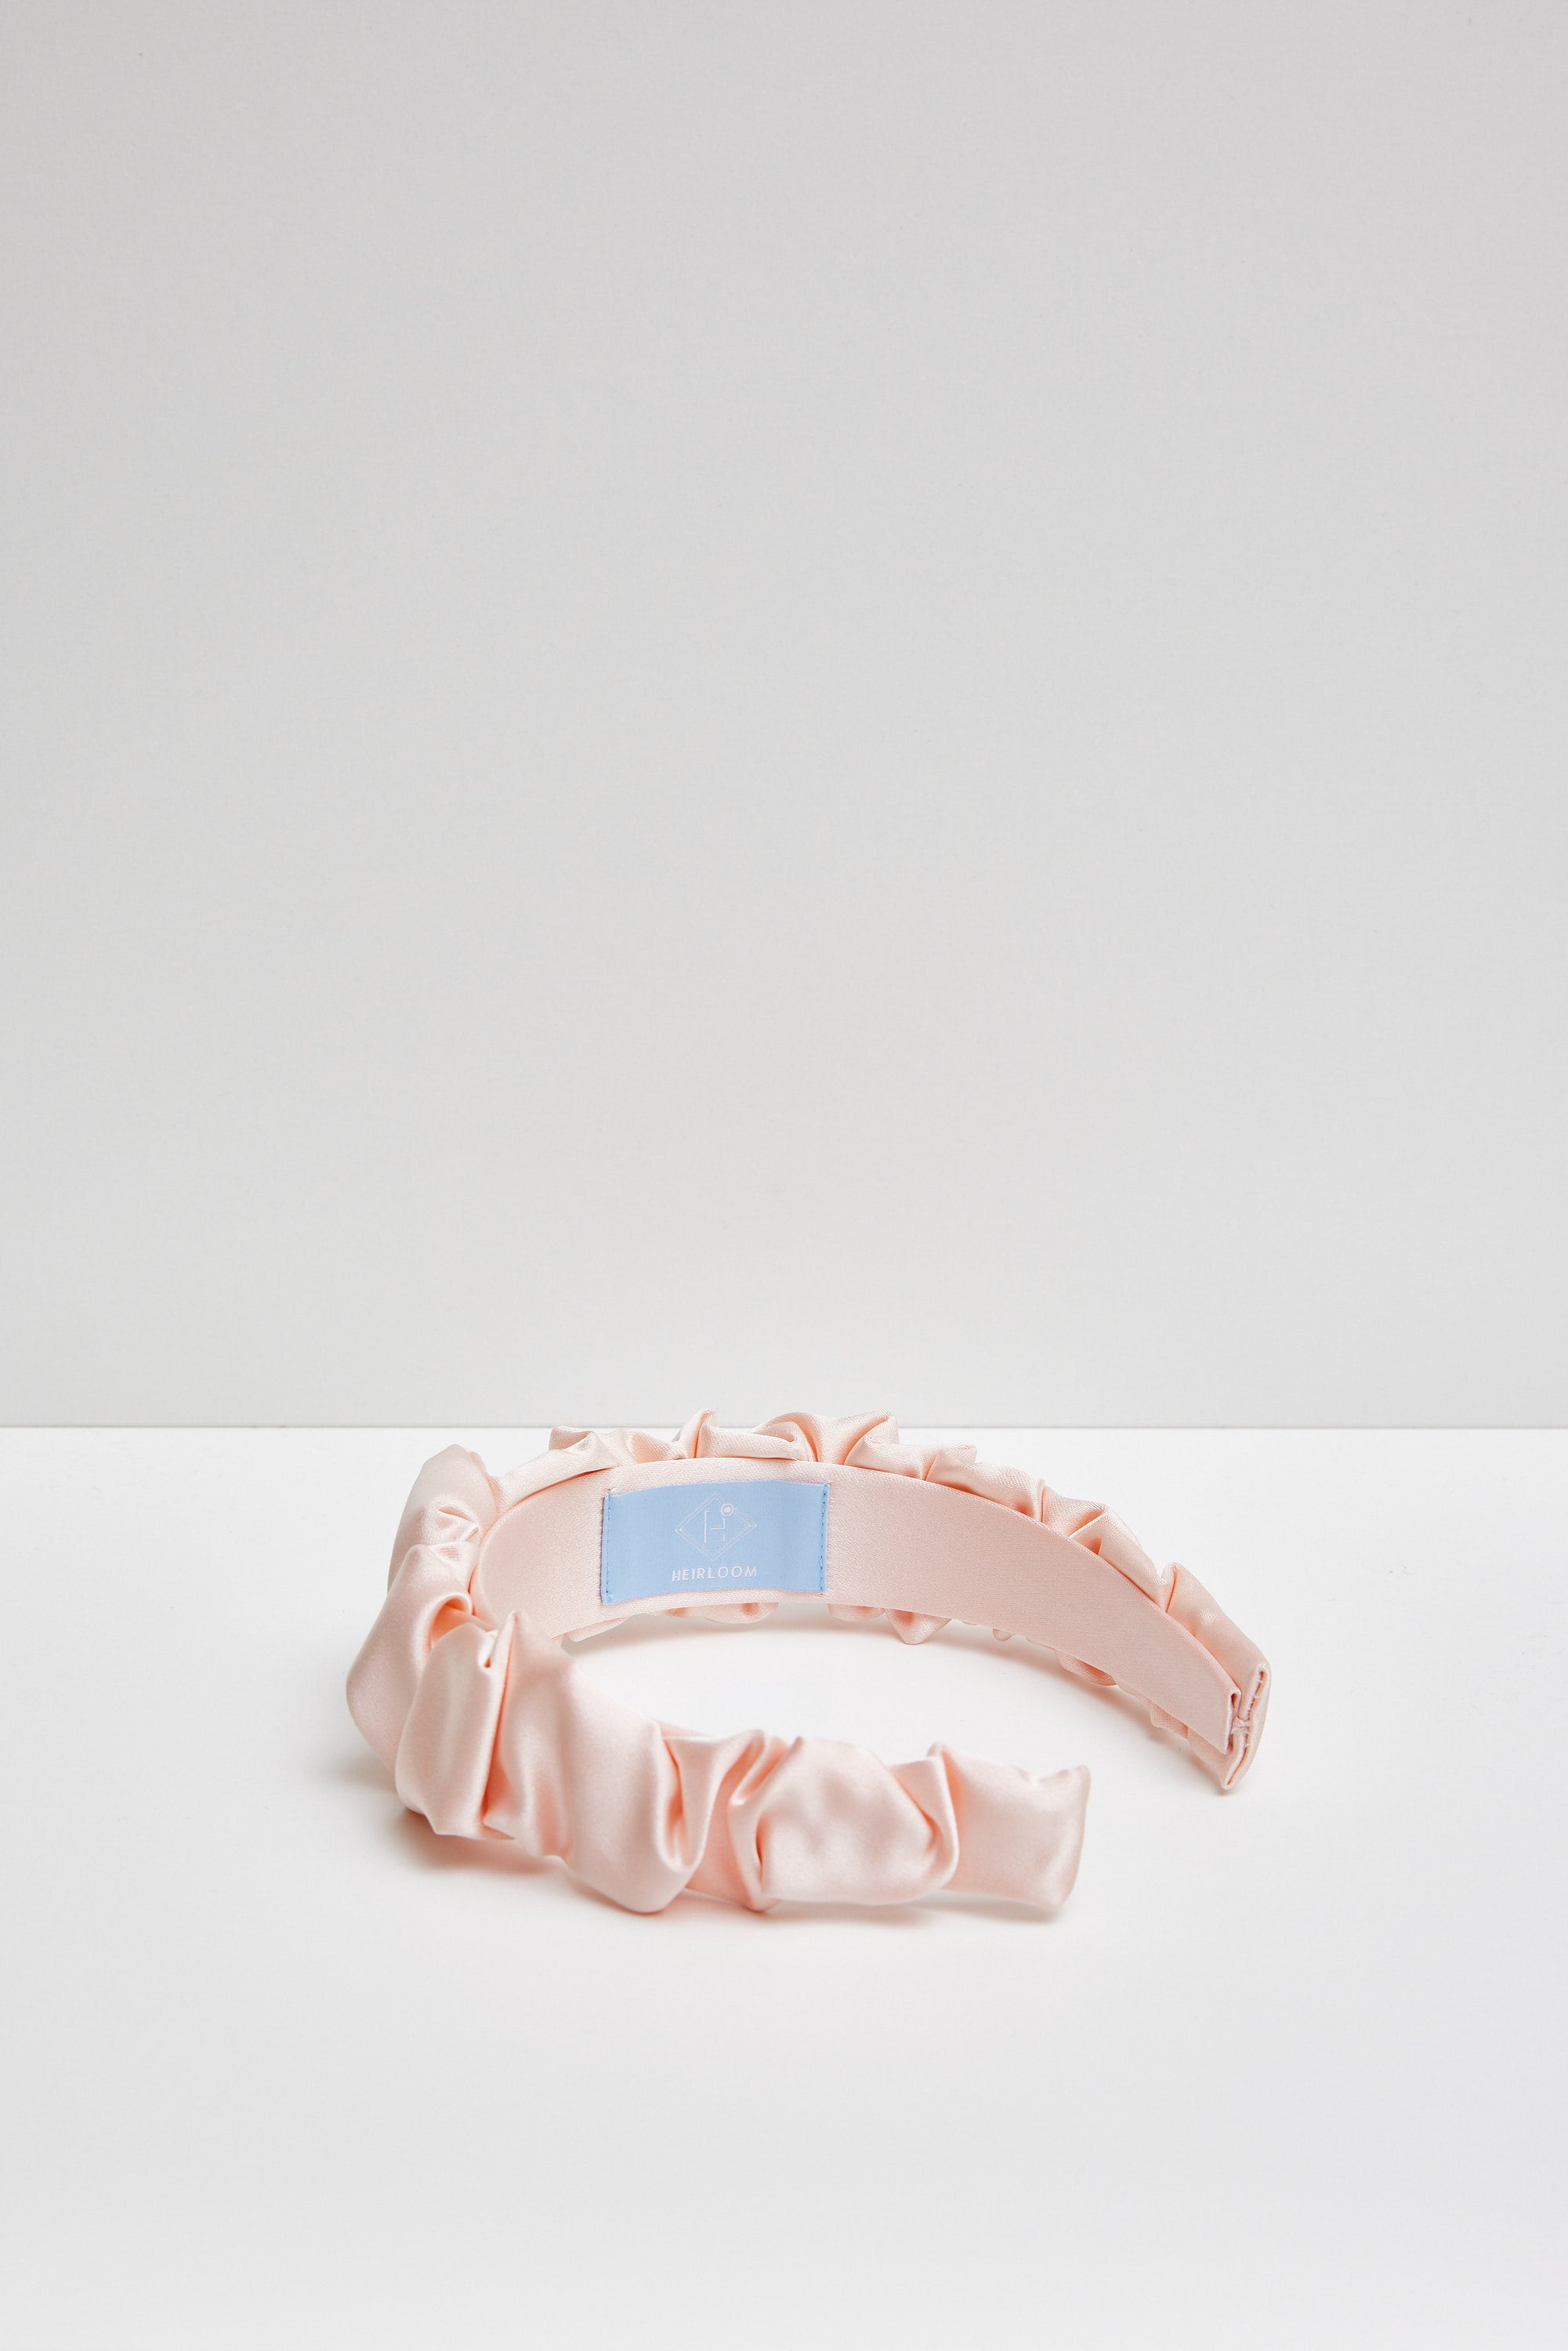 Clueless headband / Baby pink satin